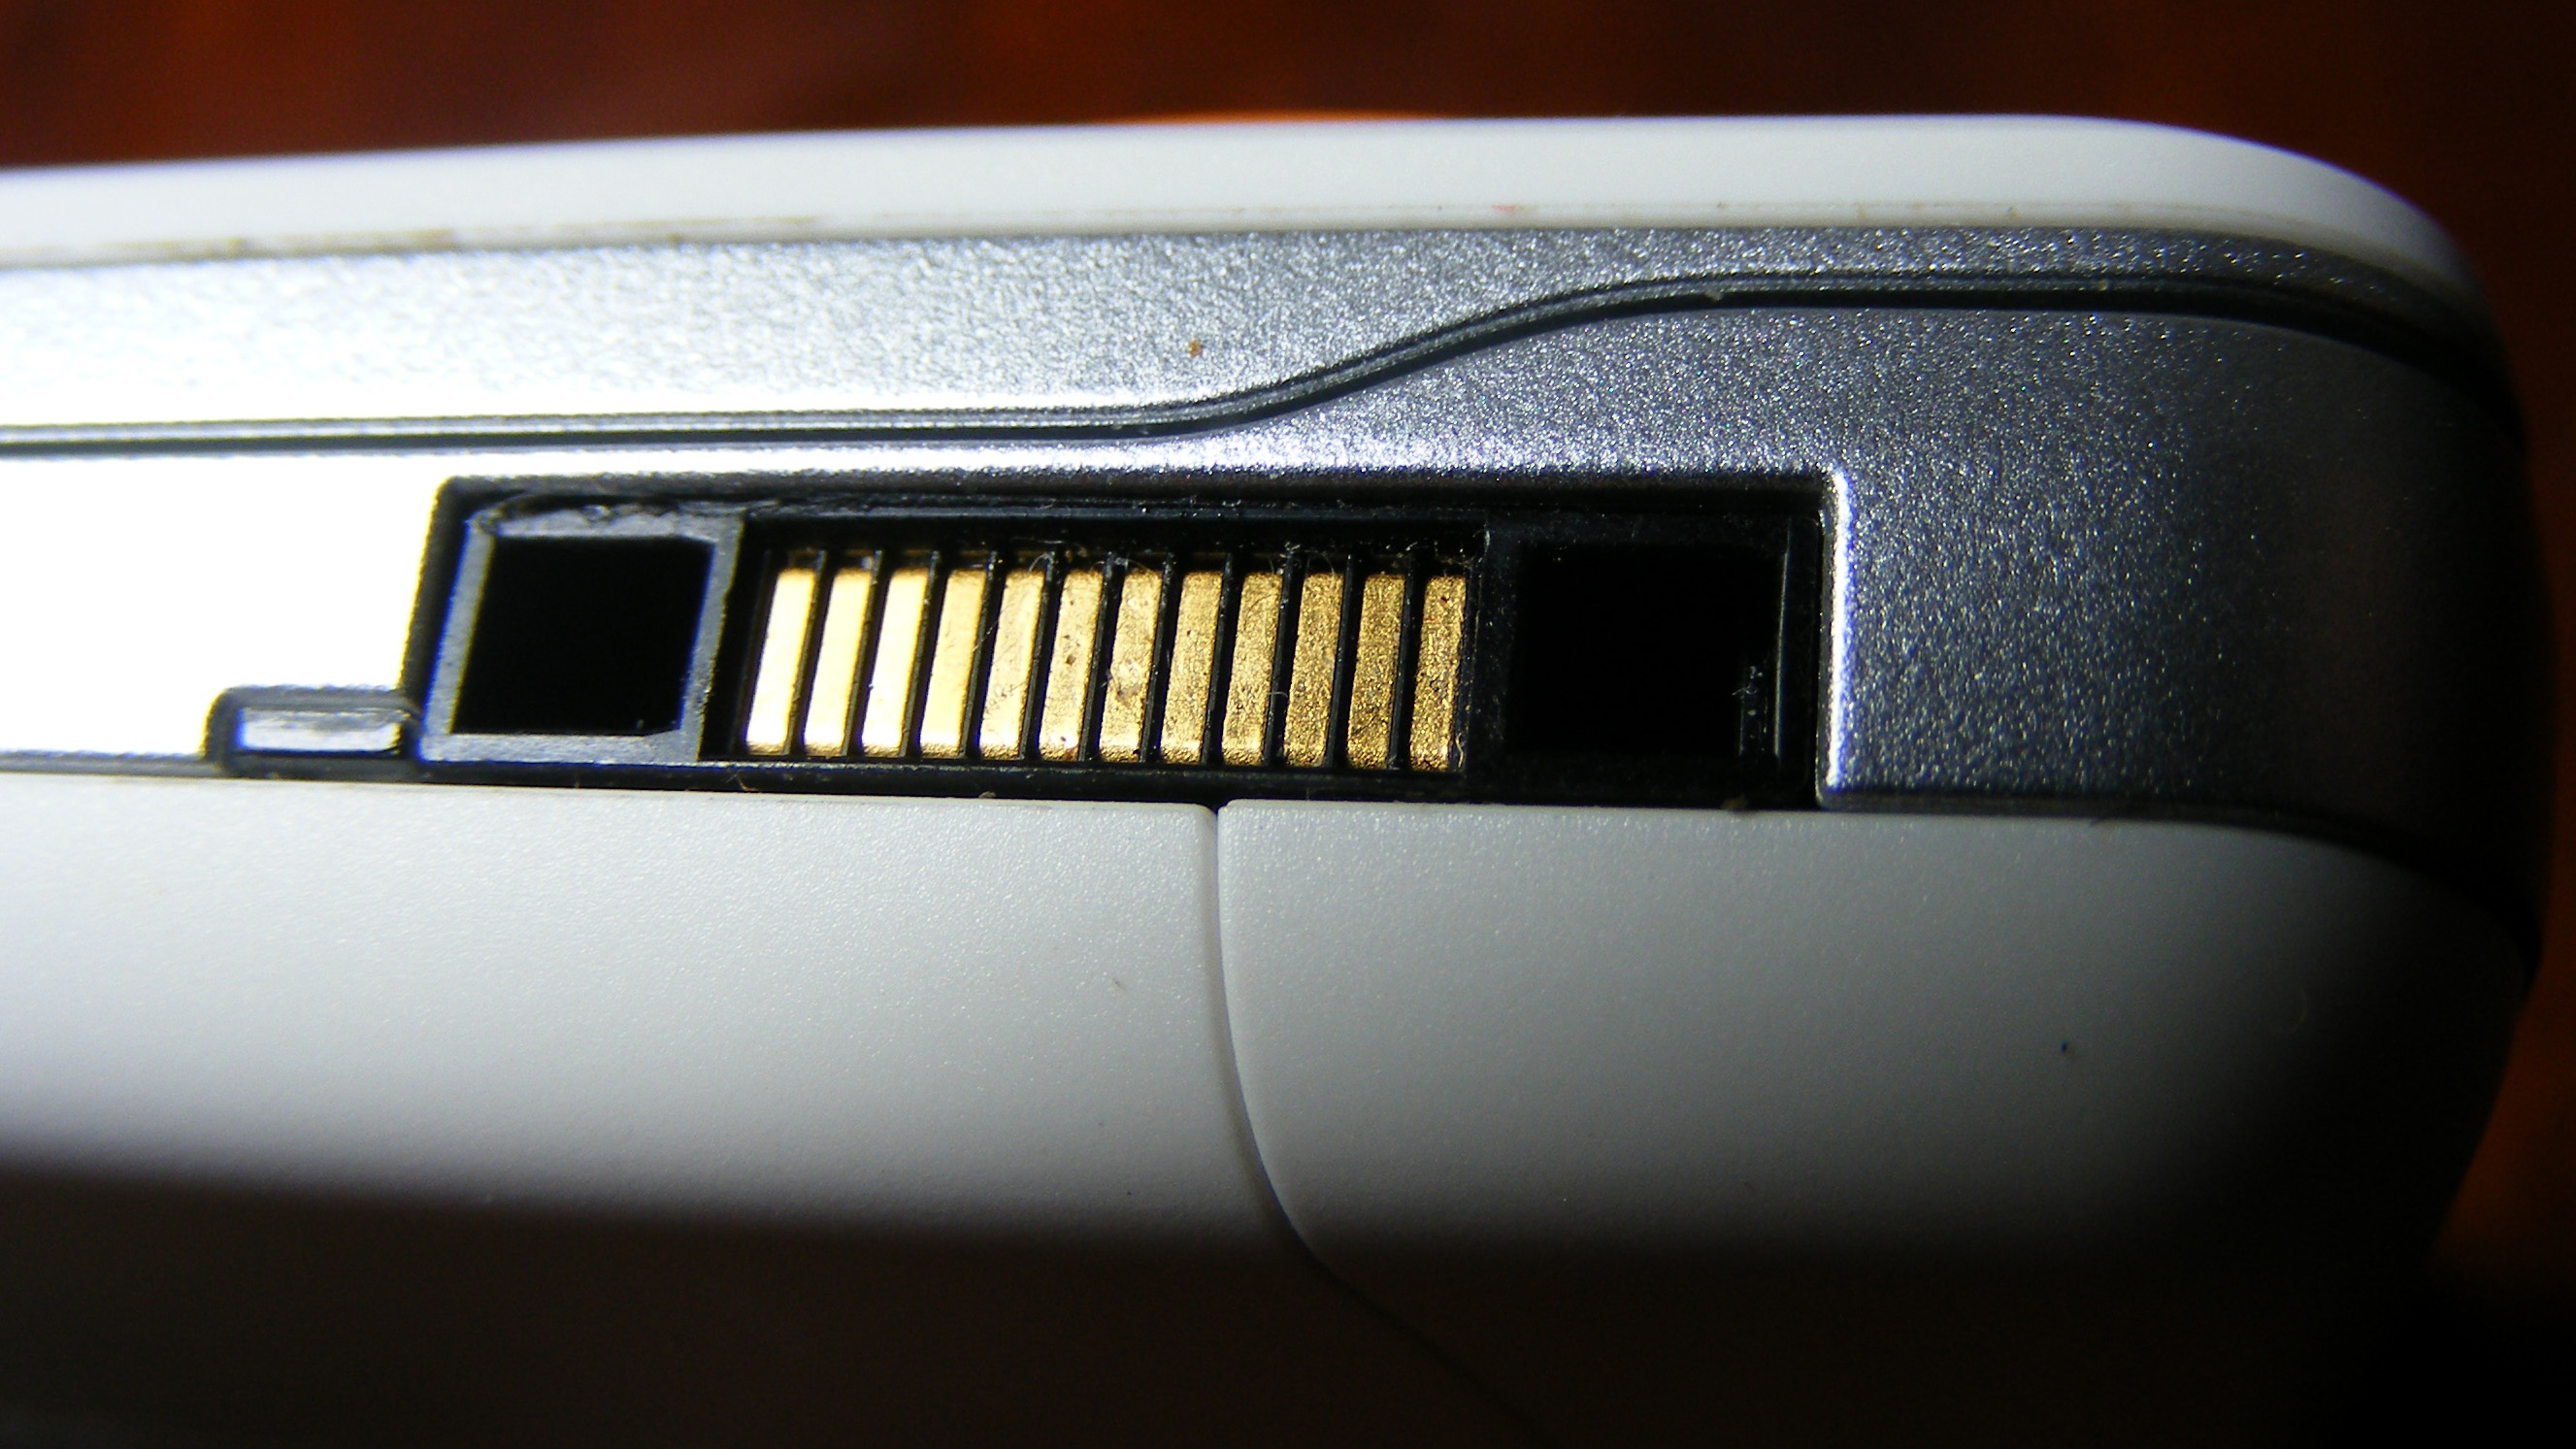 Sony Ericsson FastPort charging port